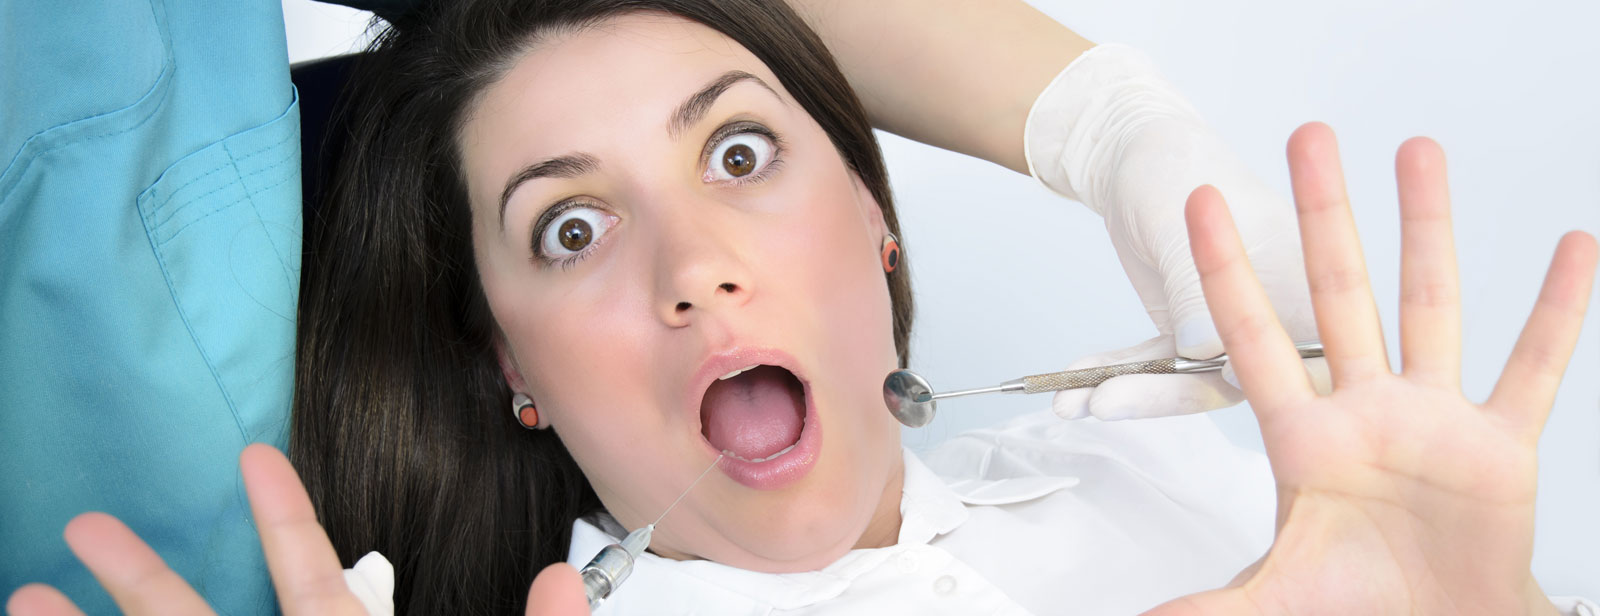 Angst voor de tandarts en hoe hiermee om te gaan